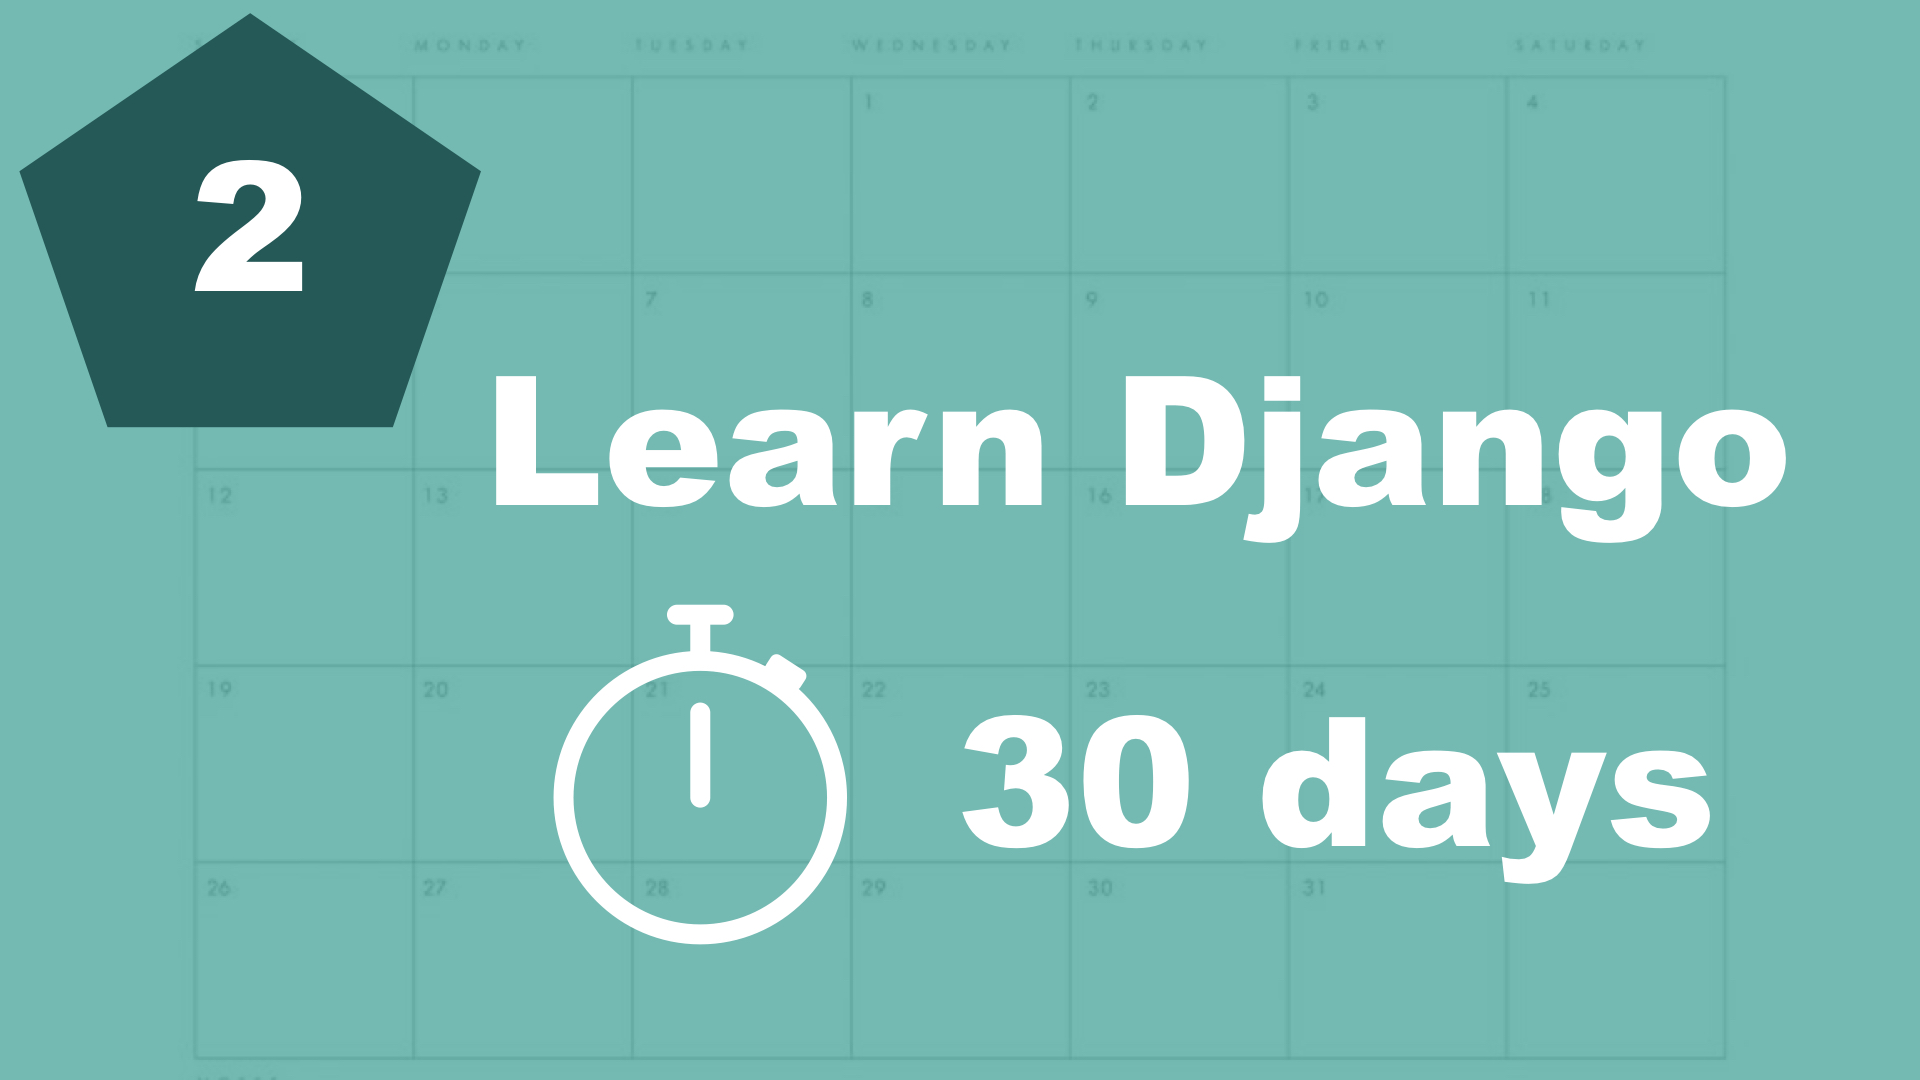 Installation and setup - 30 days of Django